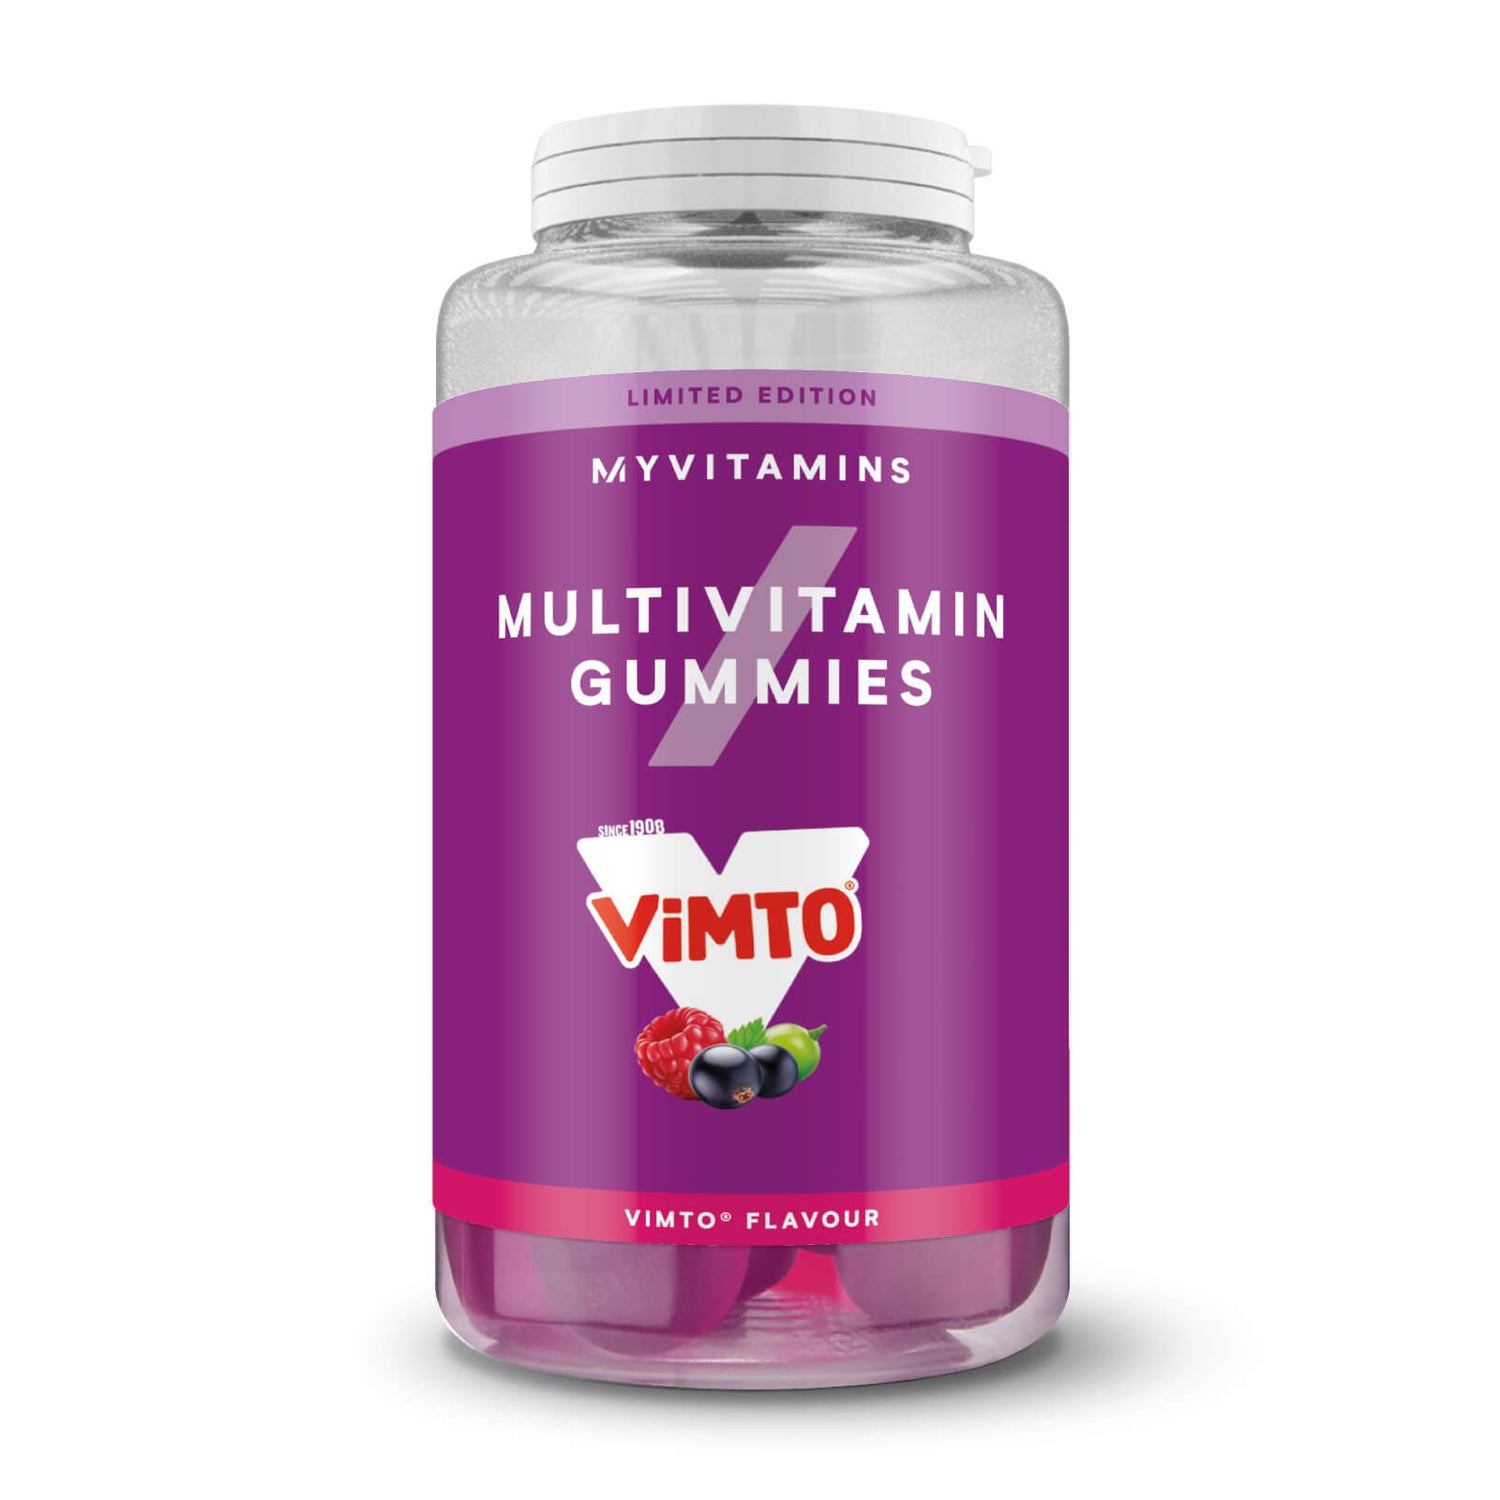 Vimto Multivitamin Gummies